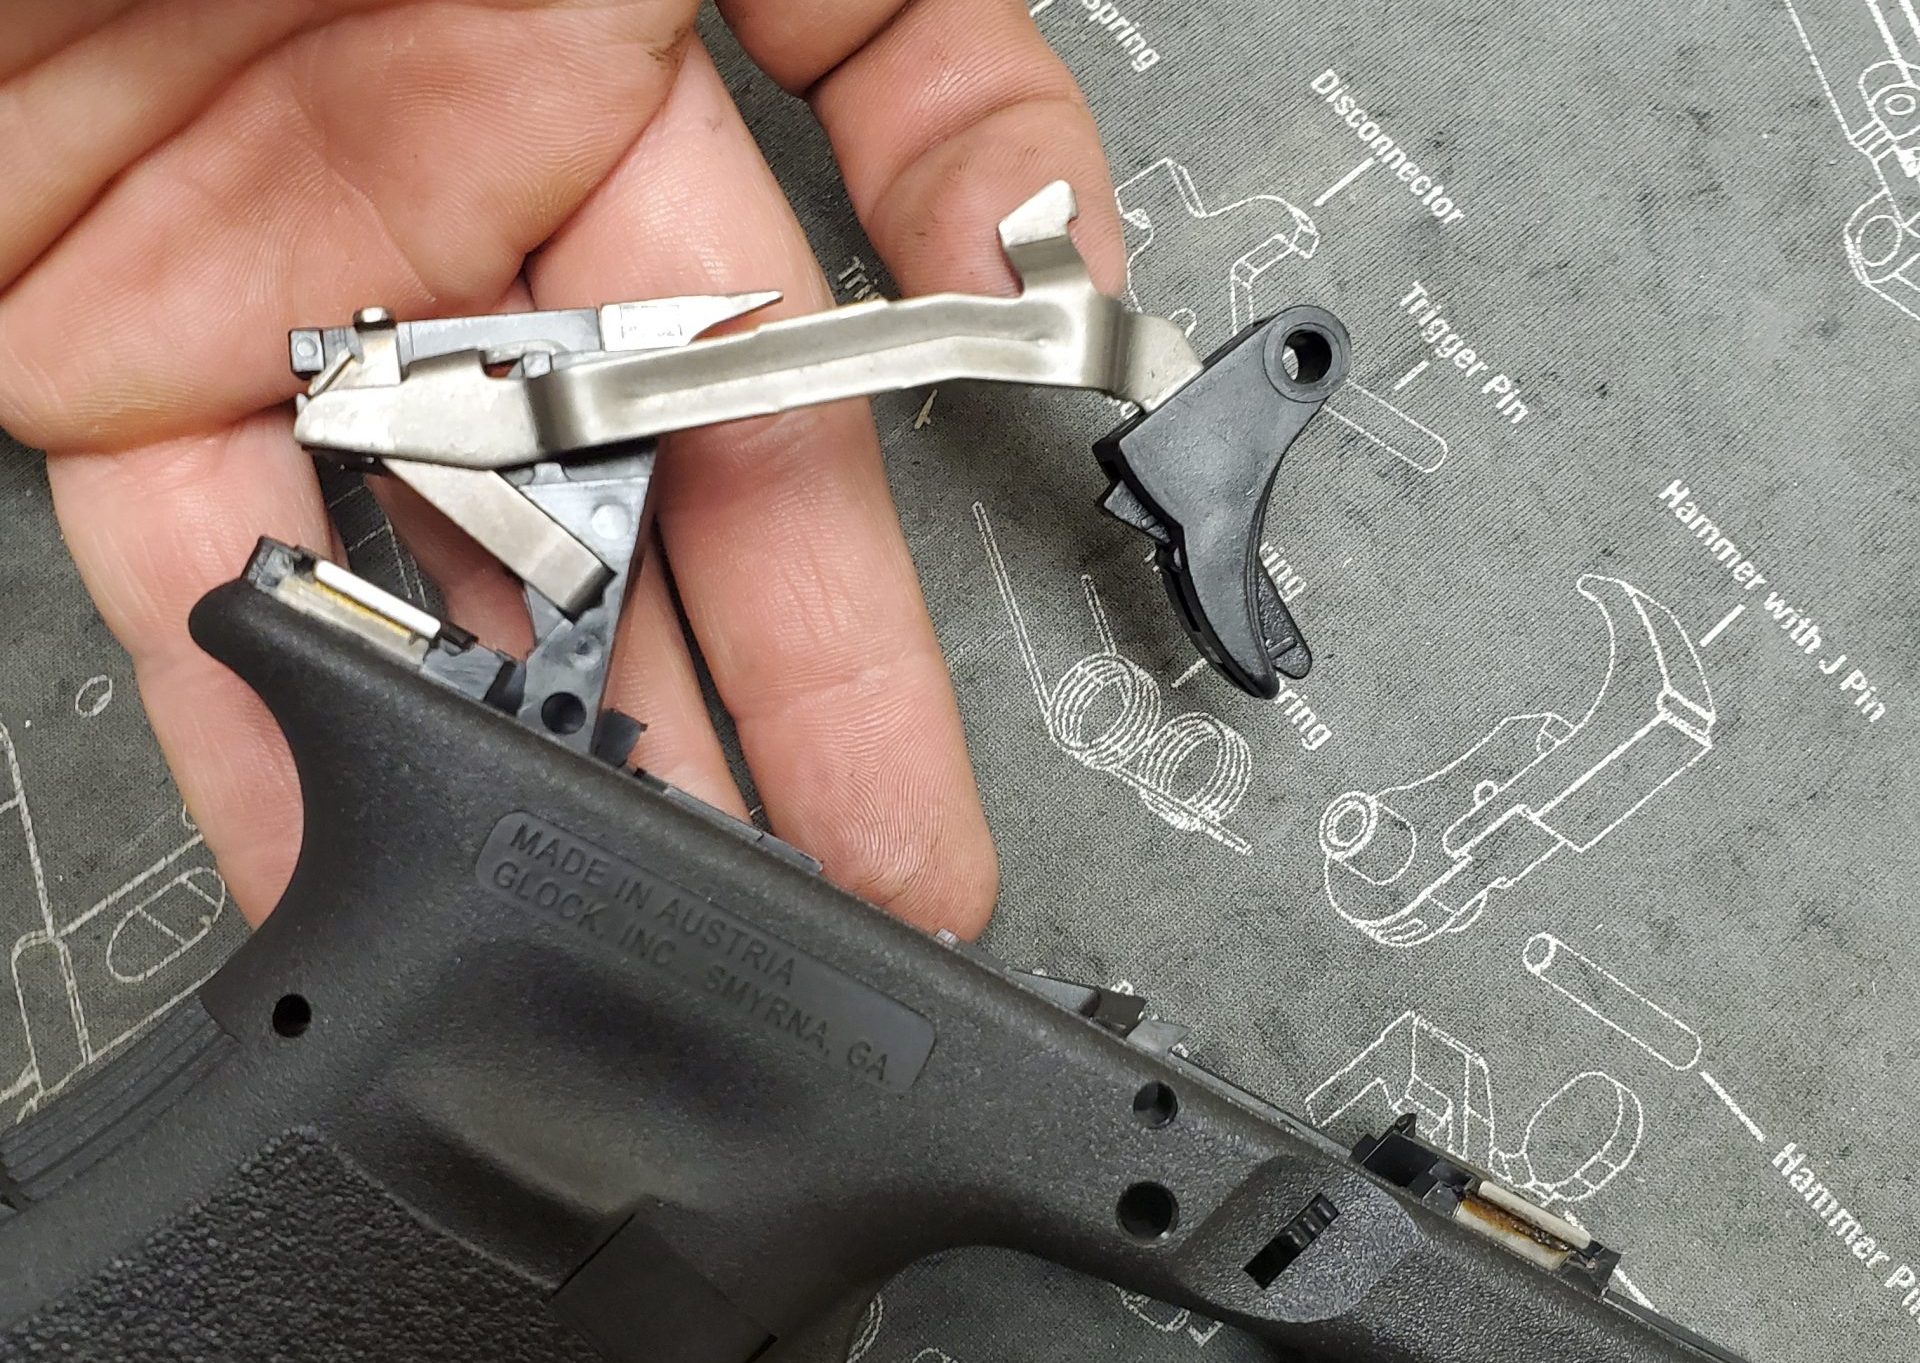 glock trigger pre travel set screw